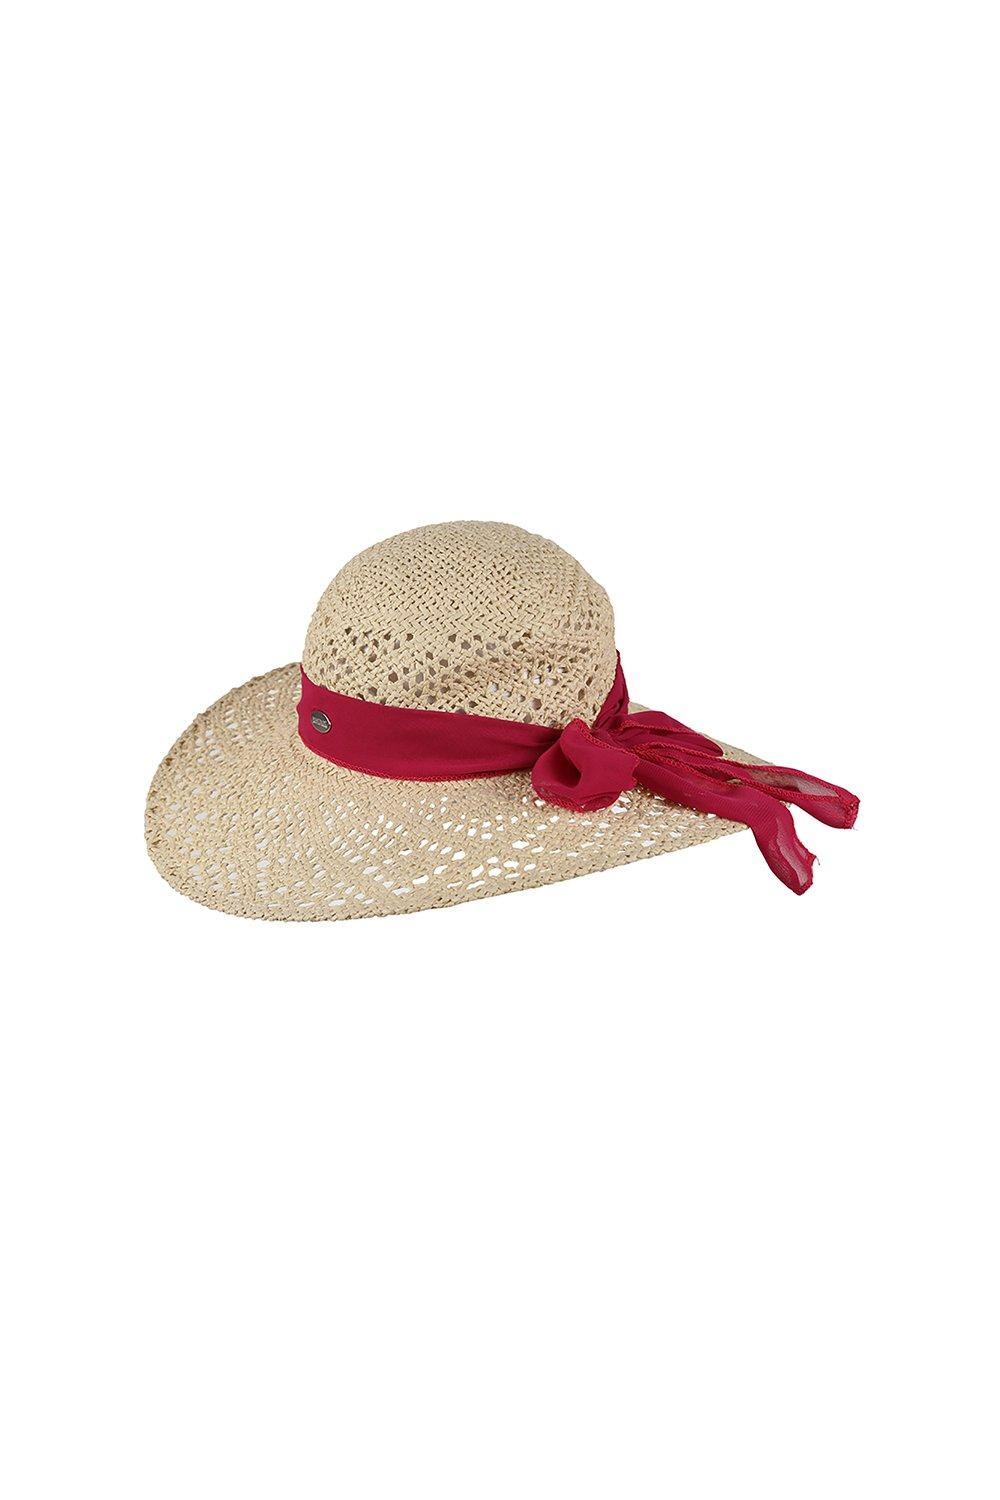 'Taura III' Соломенная бумажная шляпа от солнца Regatta, белый детская шляпа рыбака с логотипом на заказ хлопковая шляпа женская летняя солнцезащитная панама двусторонняя солнцезащитная шляпа для от